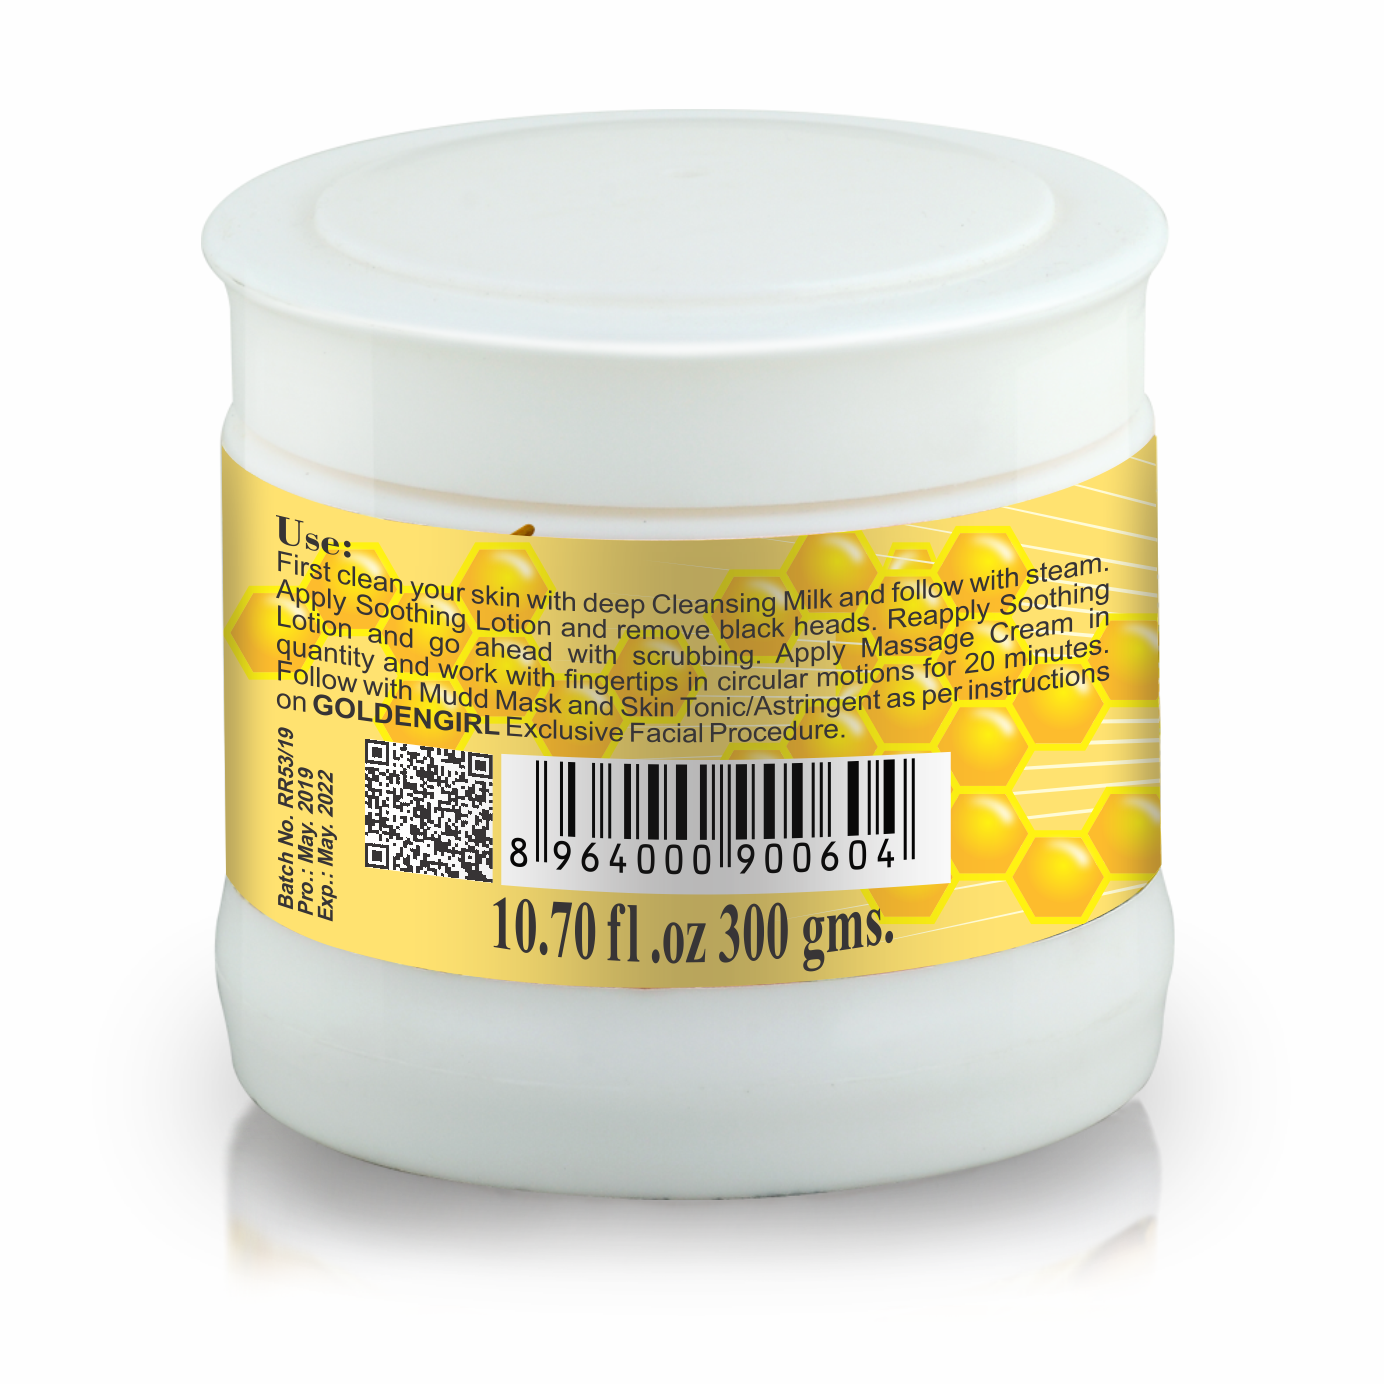 Massage Cream Honey & Almond 300ml - Golden Girl Cosmetics